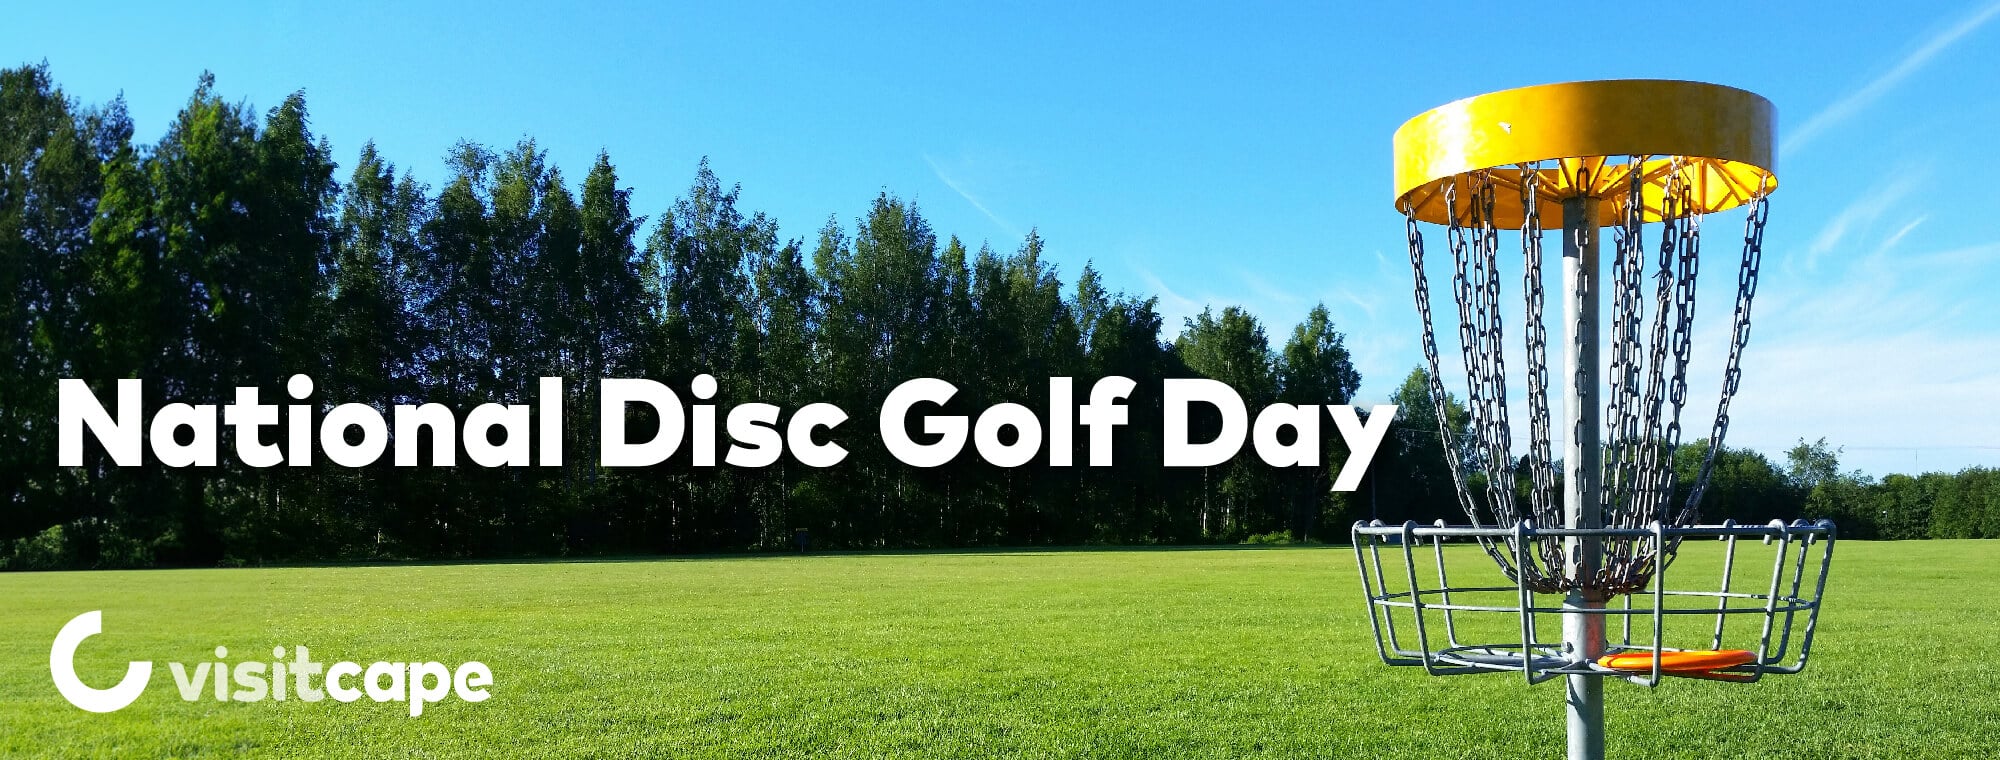 Disc golf basket in a green field.